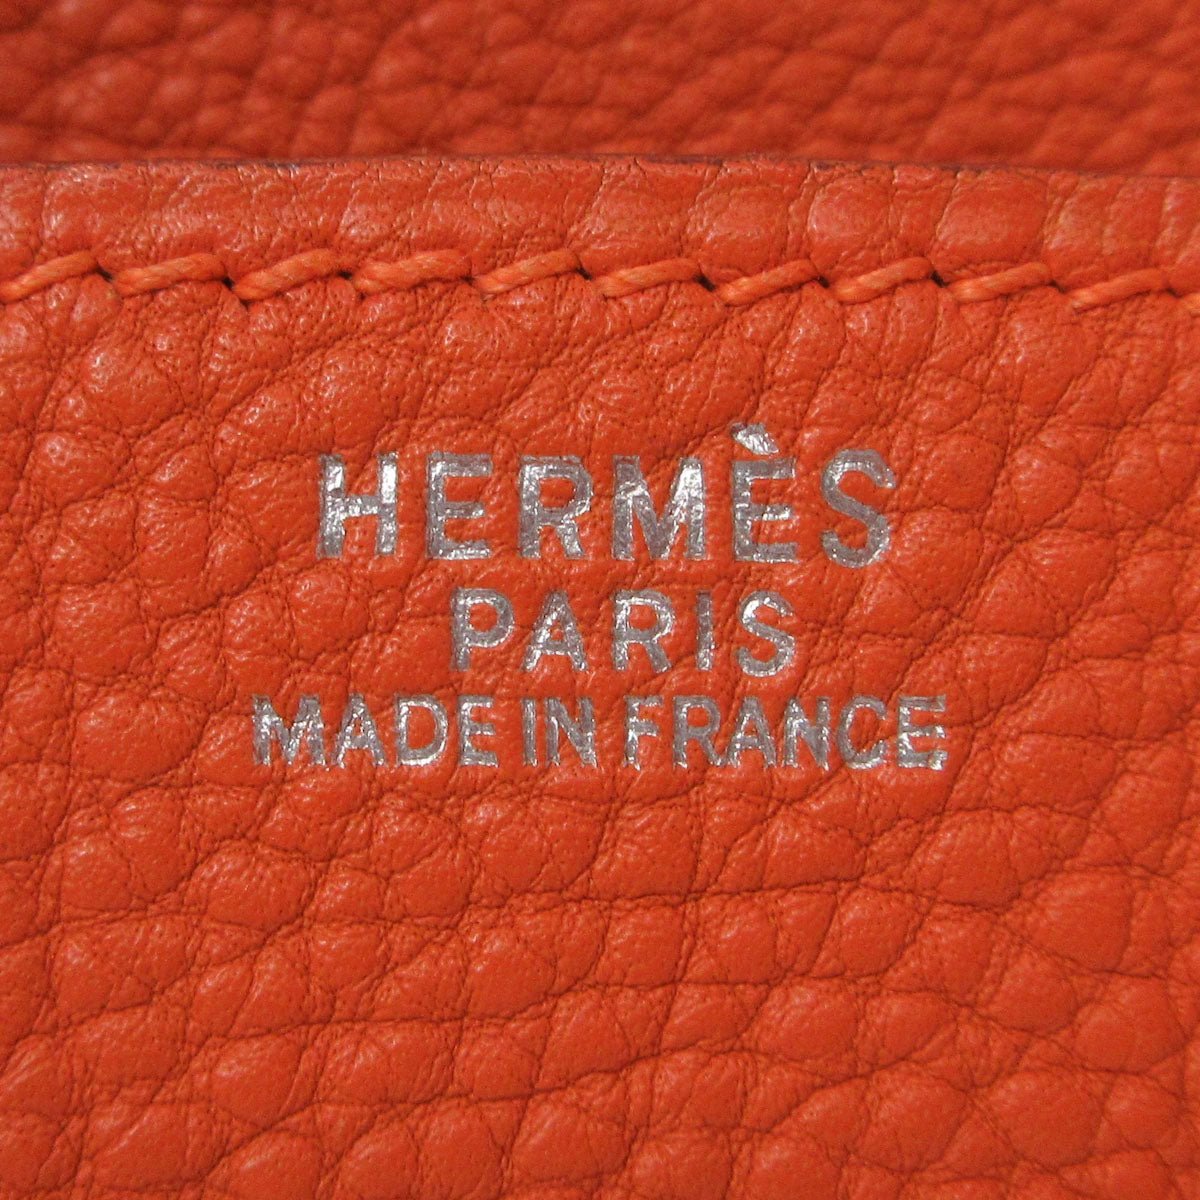 Birkin 30 Bag - HERMÈS - Affordable Luxury image